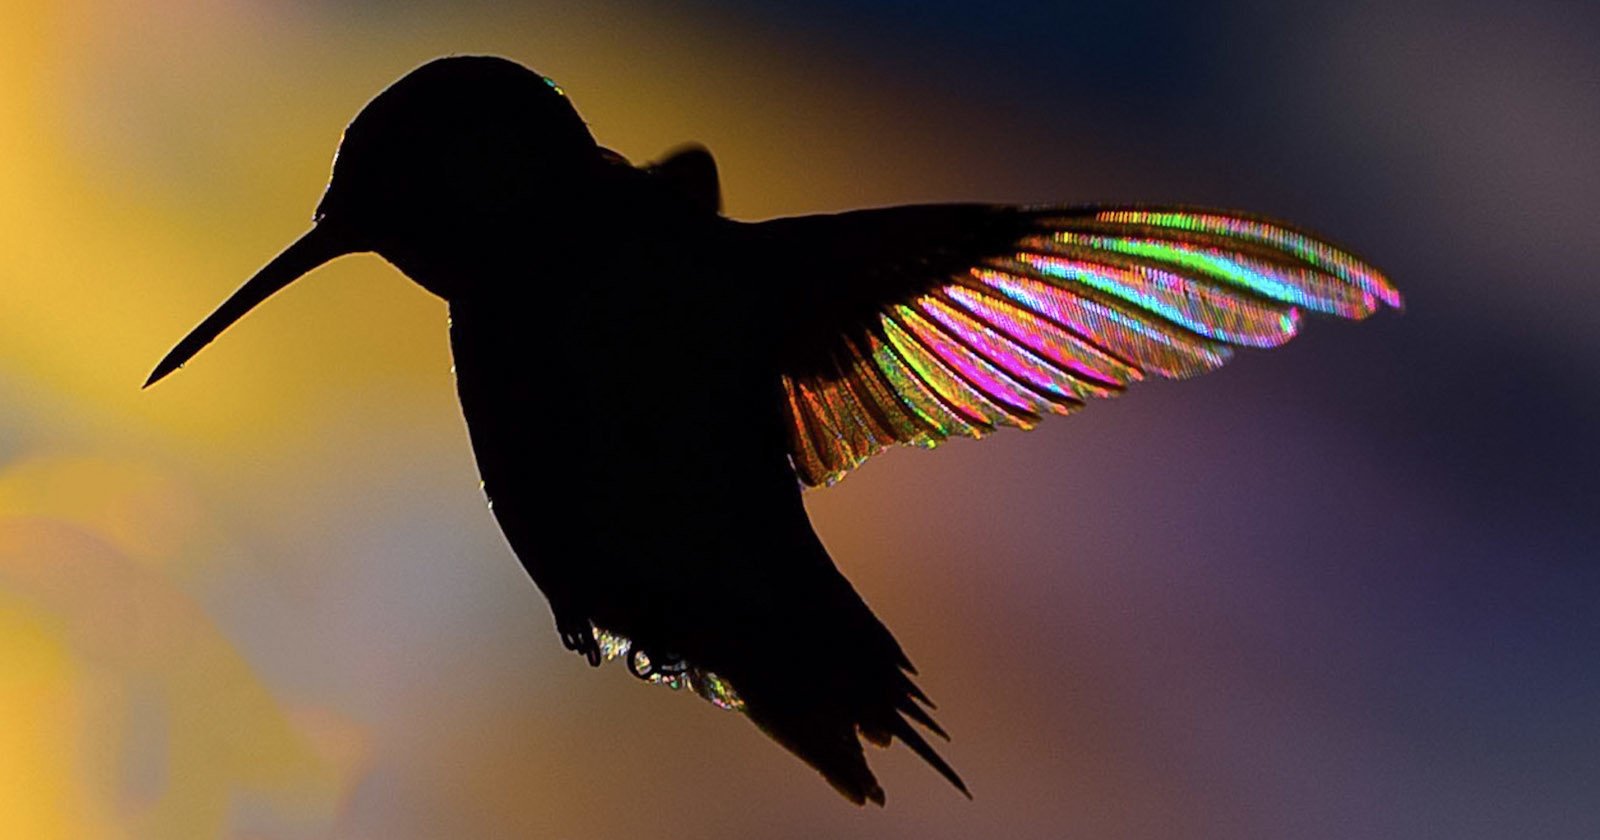  photographer waits three summers recreate hummingbird prism shots 